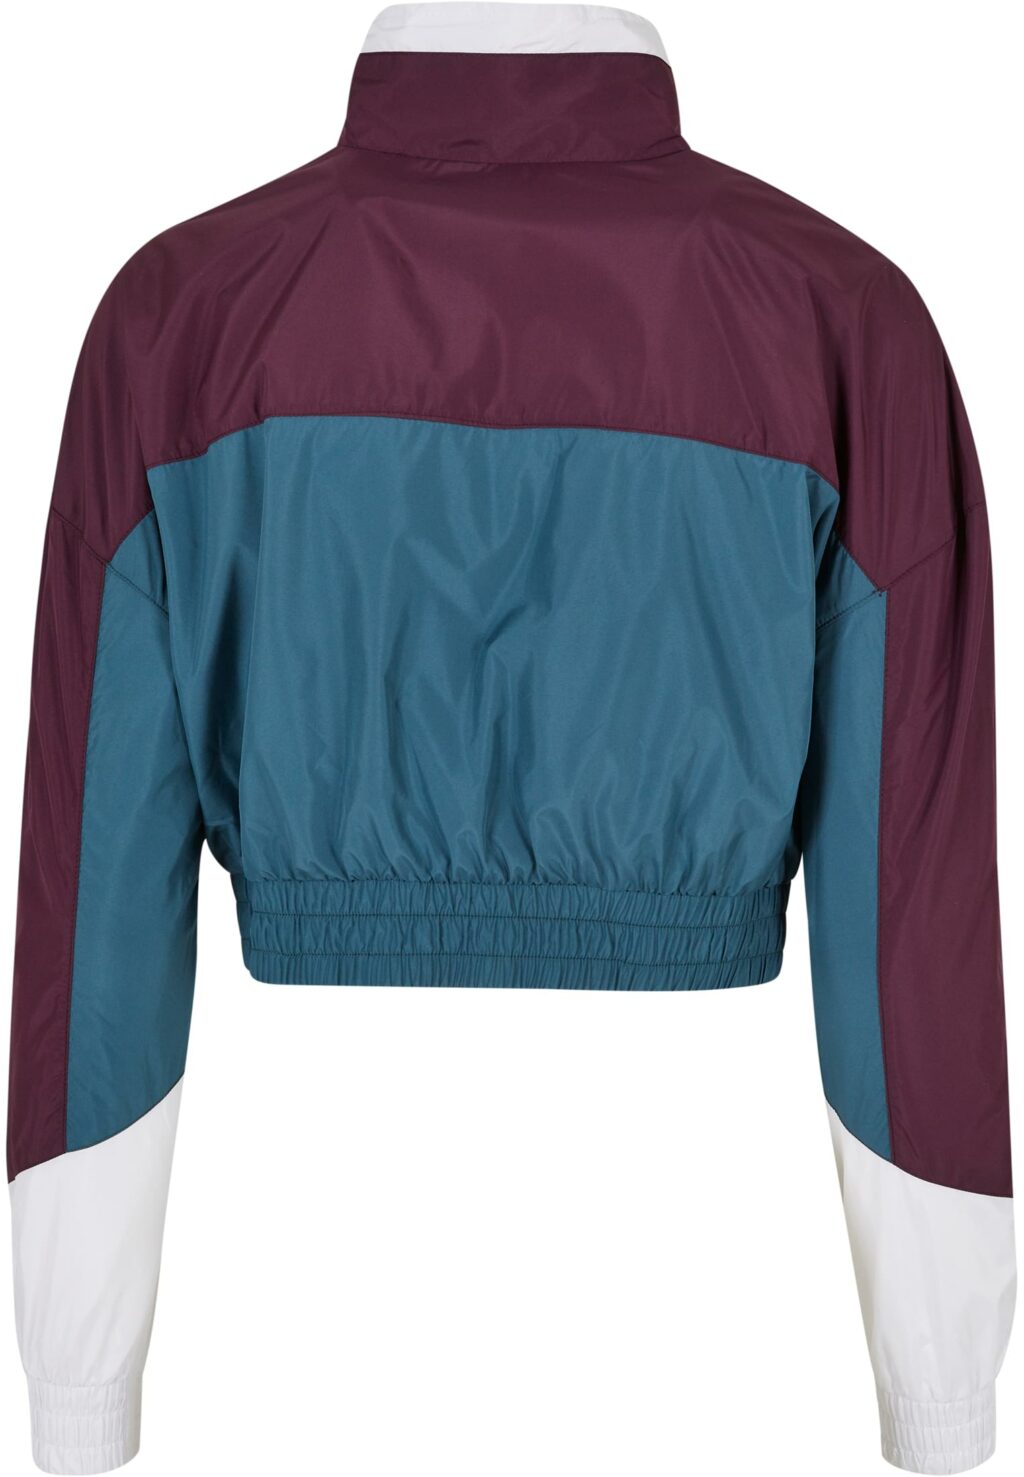 Ladies Starter Colorblock Pull Over Jacket darkviolet/teal ST171